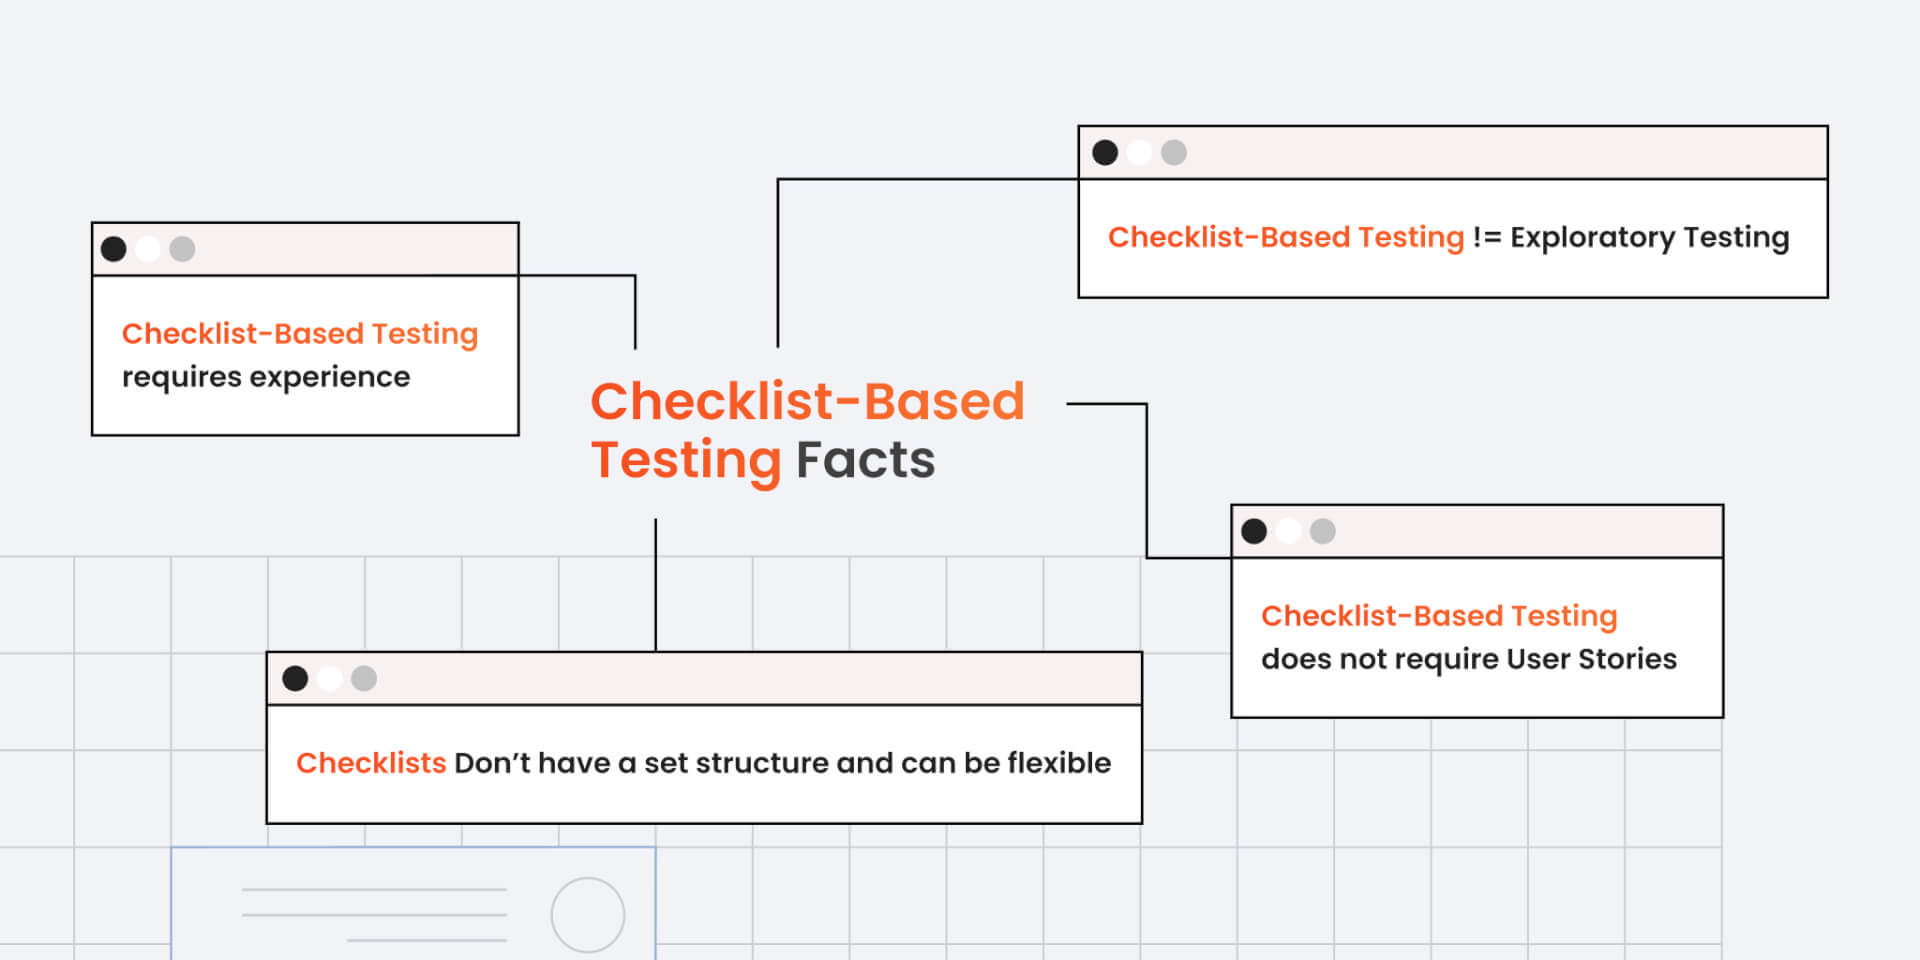 Benefits of using checklist-based testing